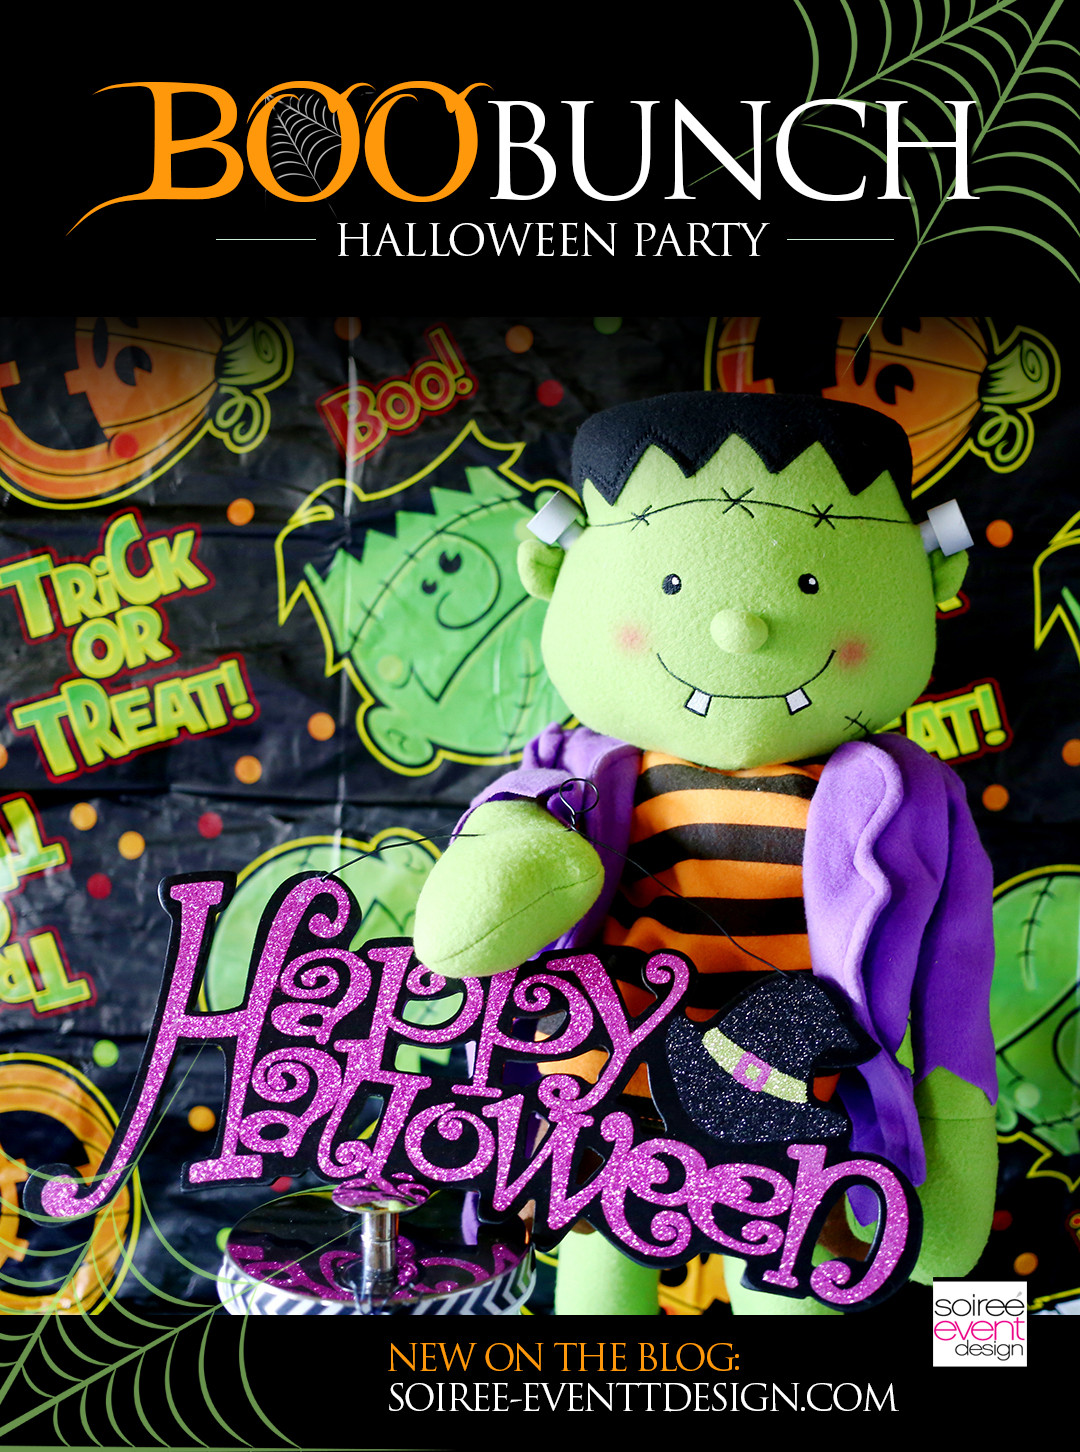 Family Friendly Halloween Party Ideas
 Kid Friendly Halloween Party Ideas "Boo Bunch" Soiree